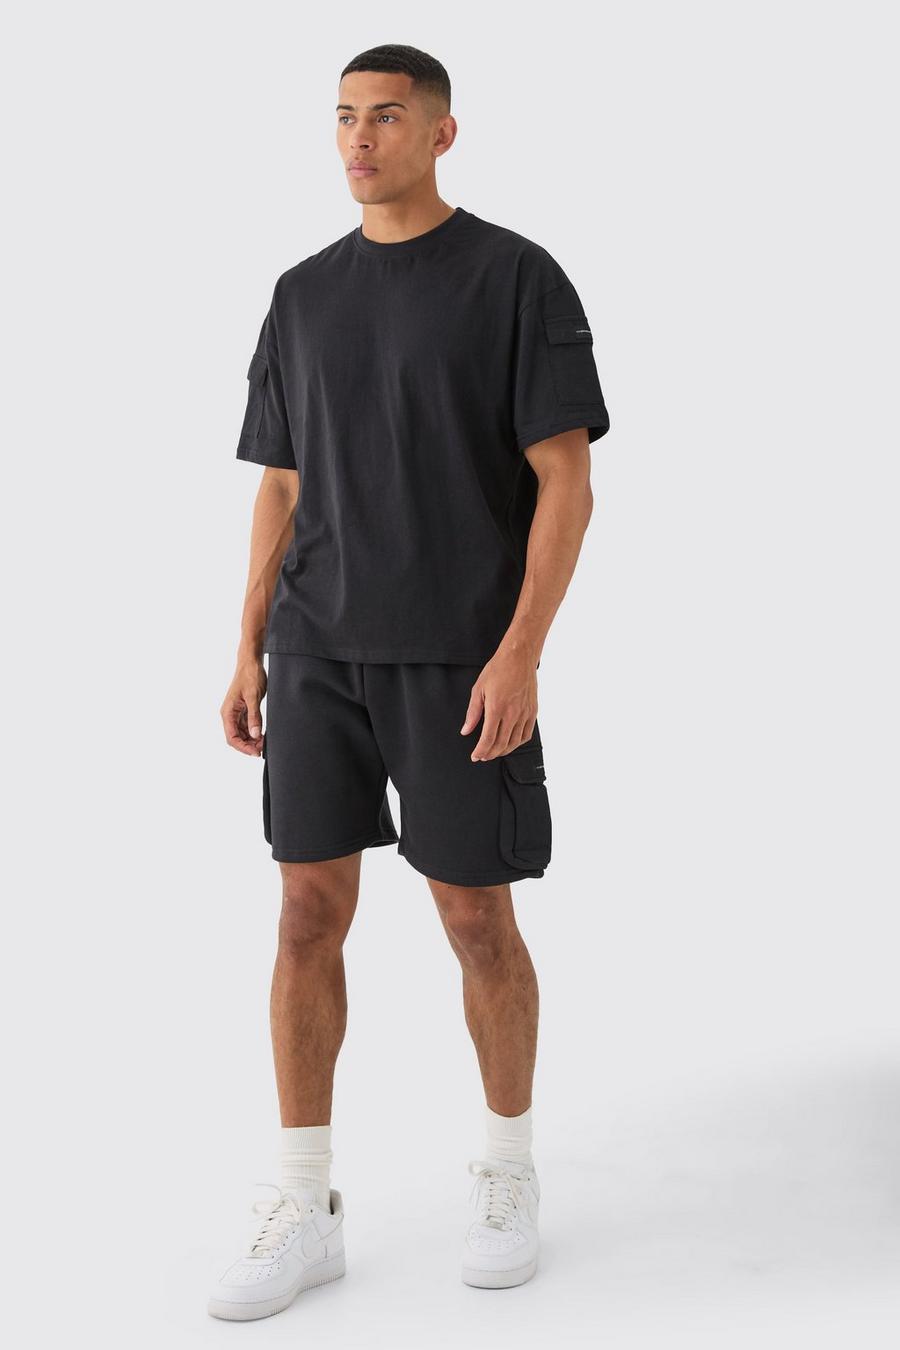 Ensemble oversize avec t-shirt et short - MAN, Black image number 1